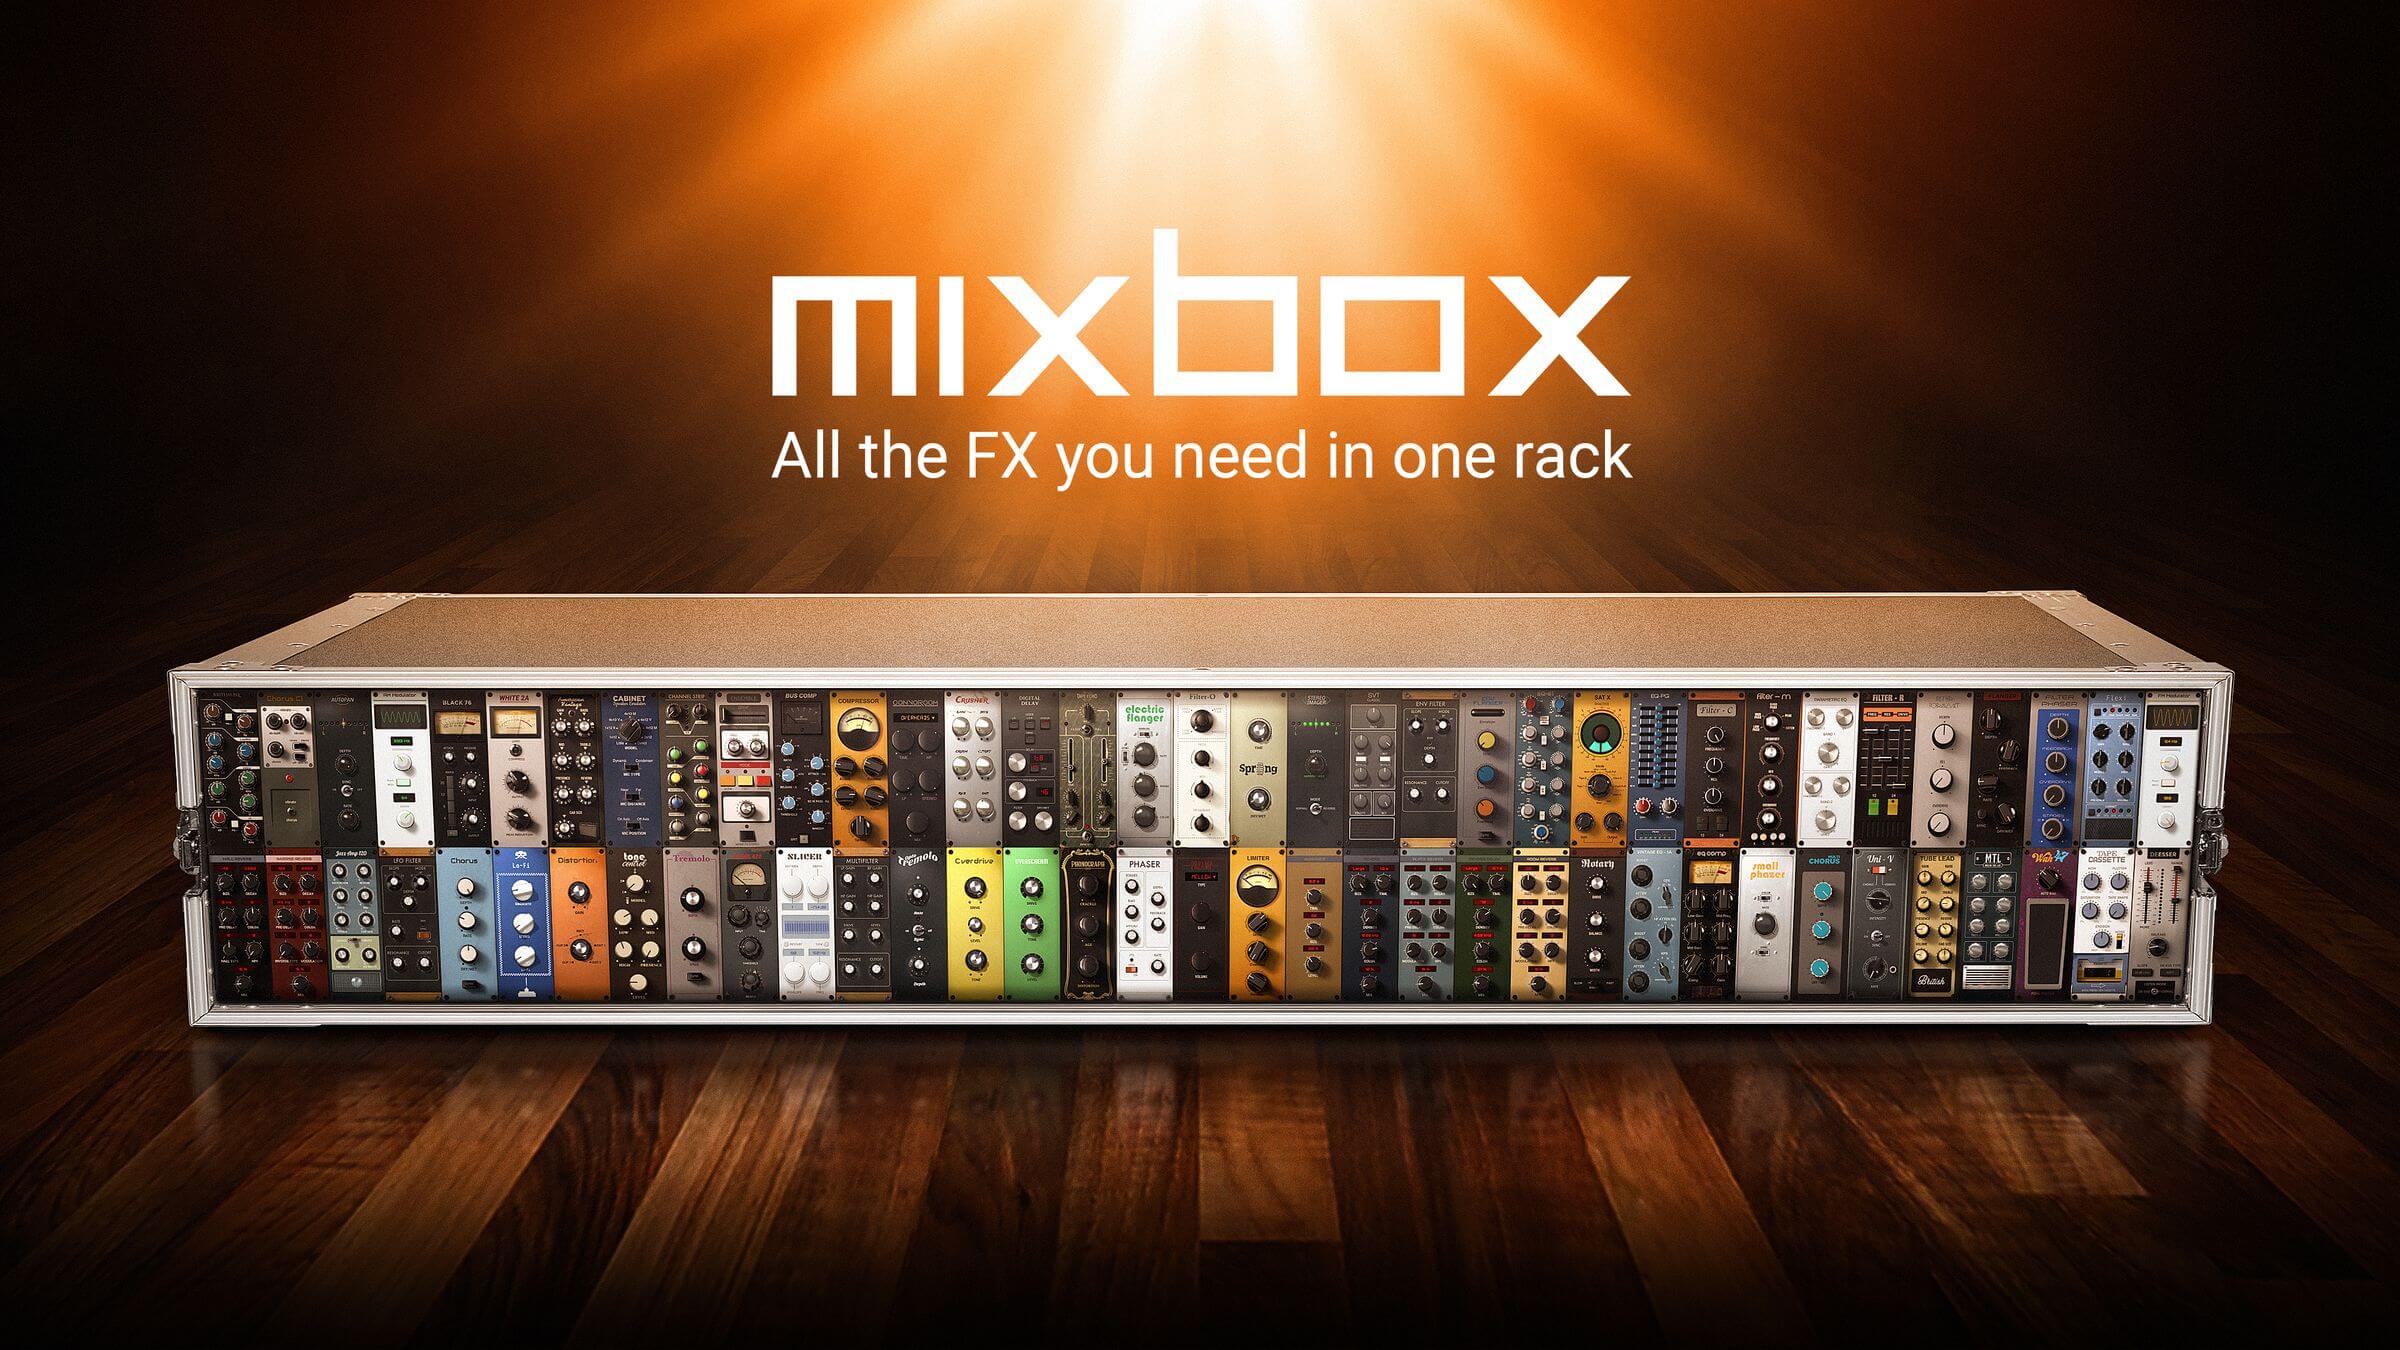 ik media mixbox